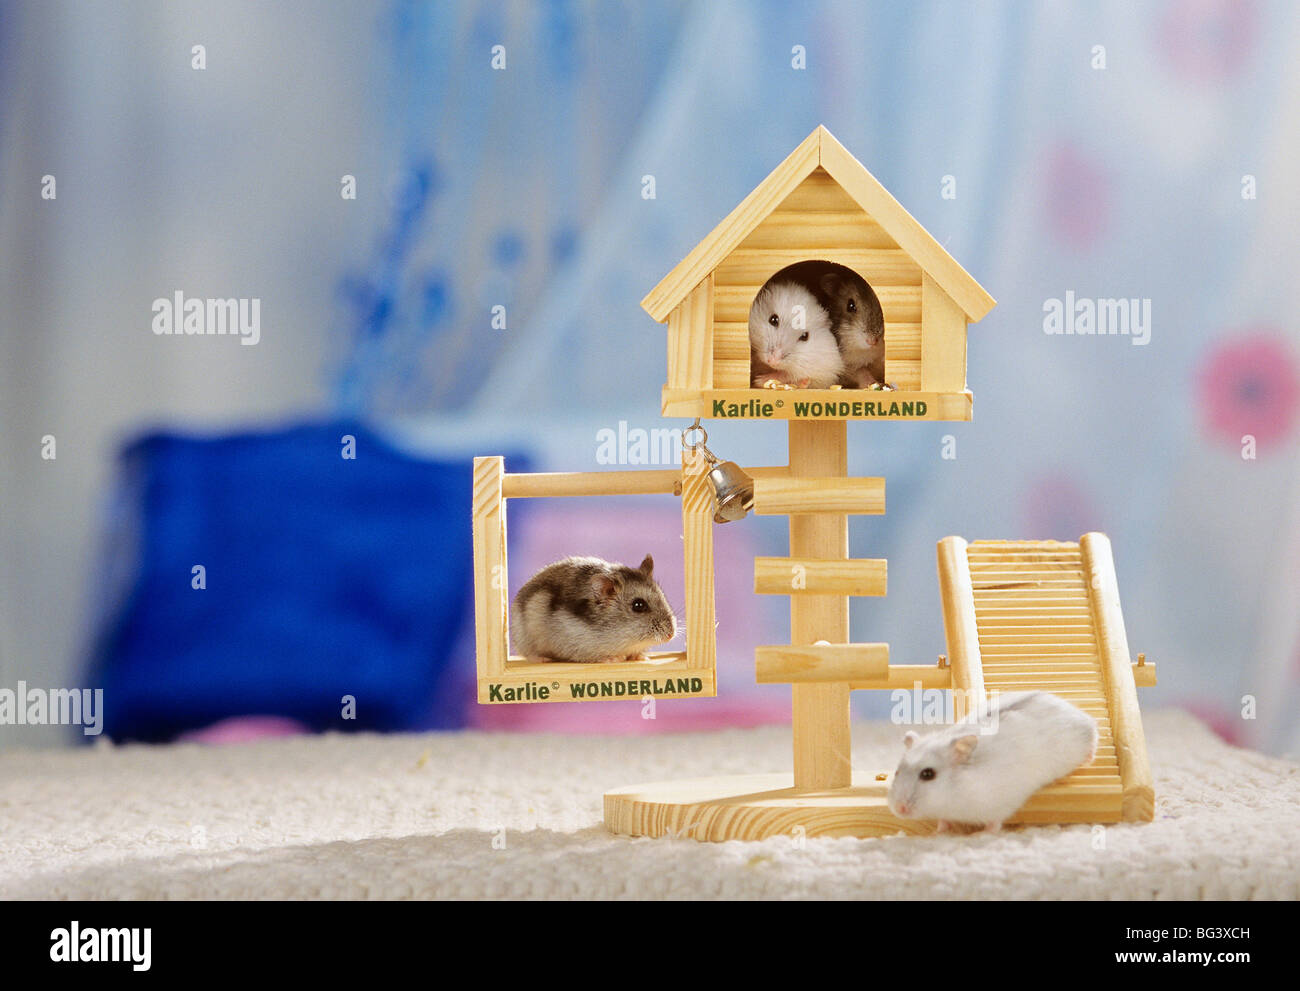 dwarf hamster house